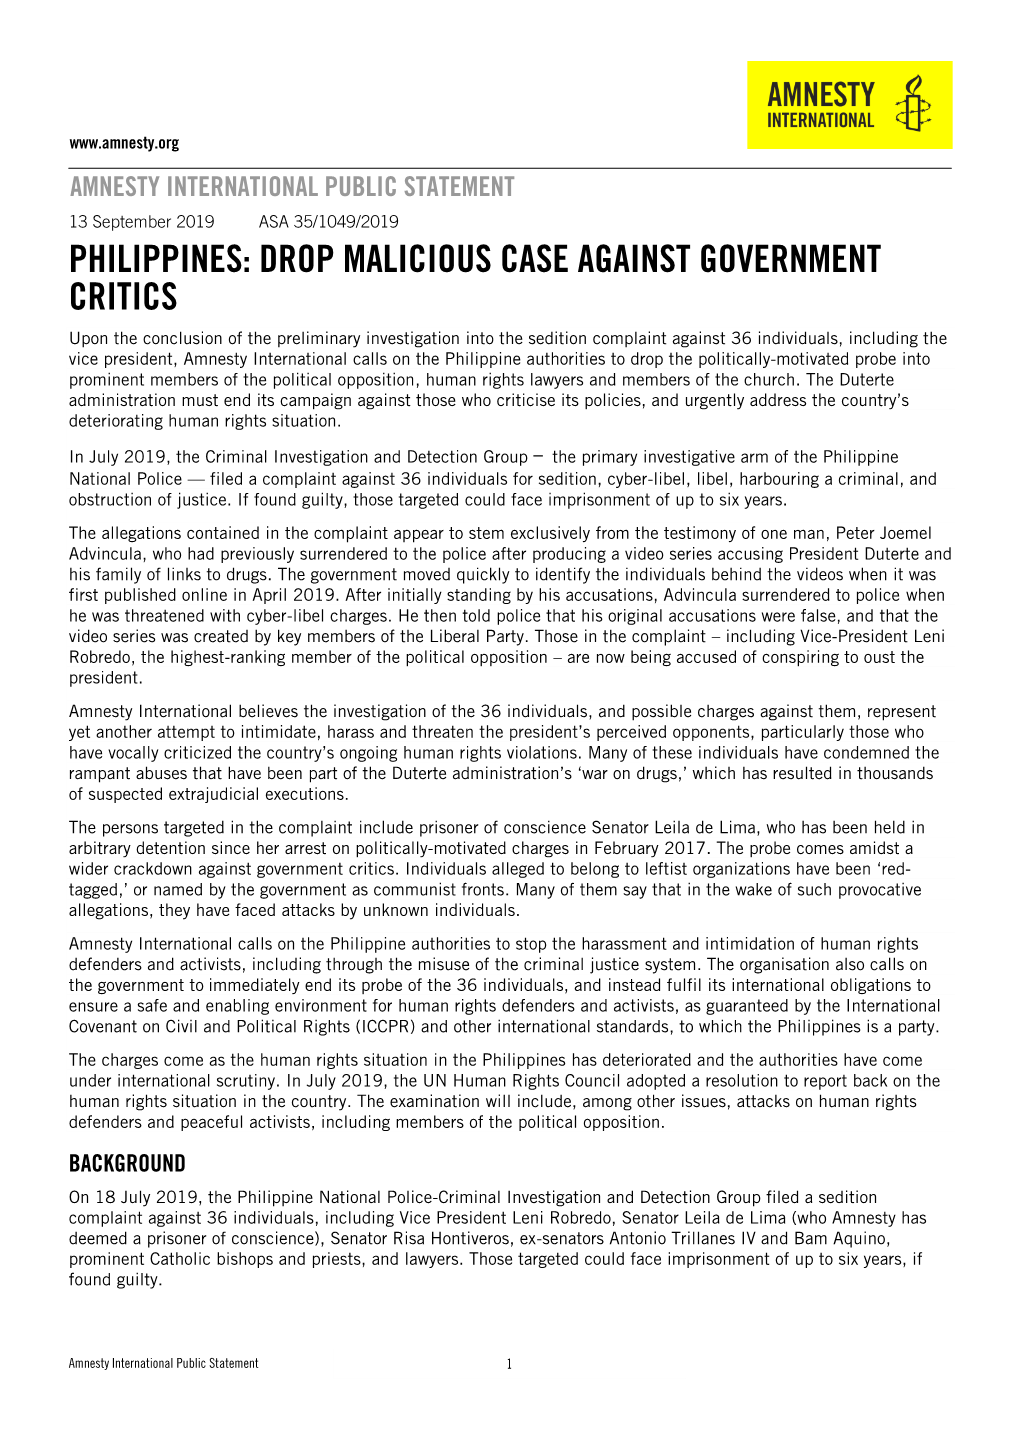 Philippines: Drop Malicious Case Against Government Critics